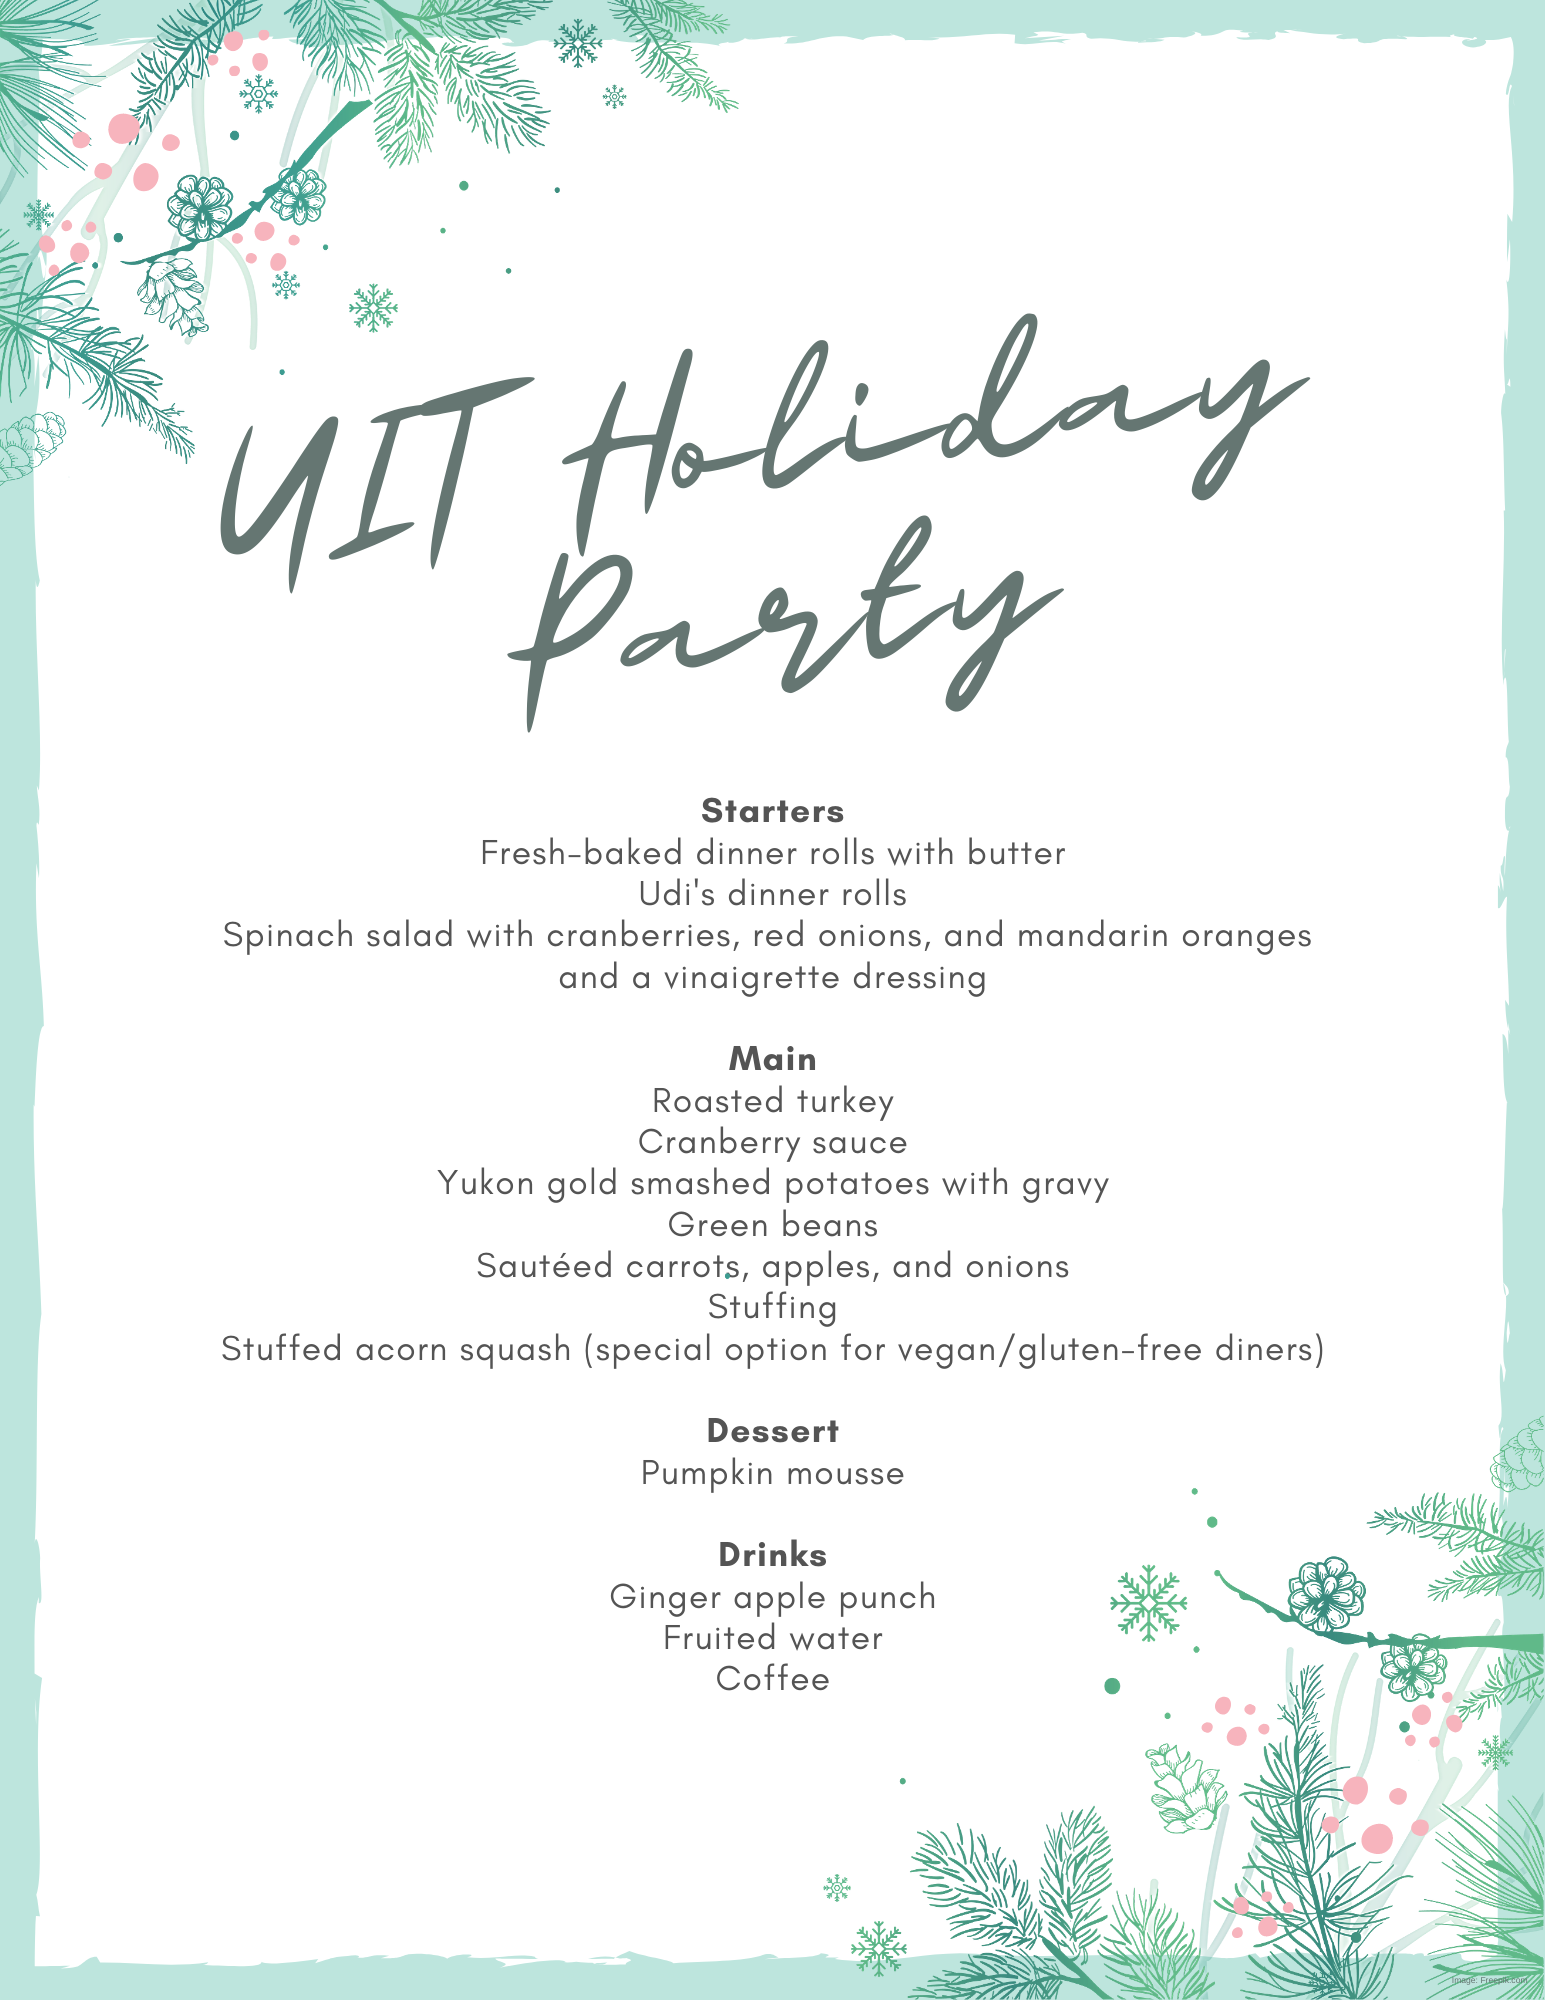 2019 UIT Holiday Party menu